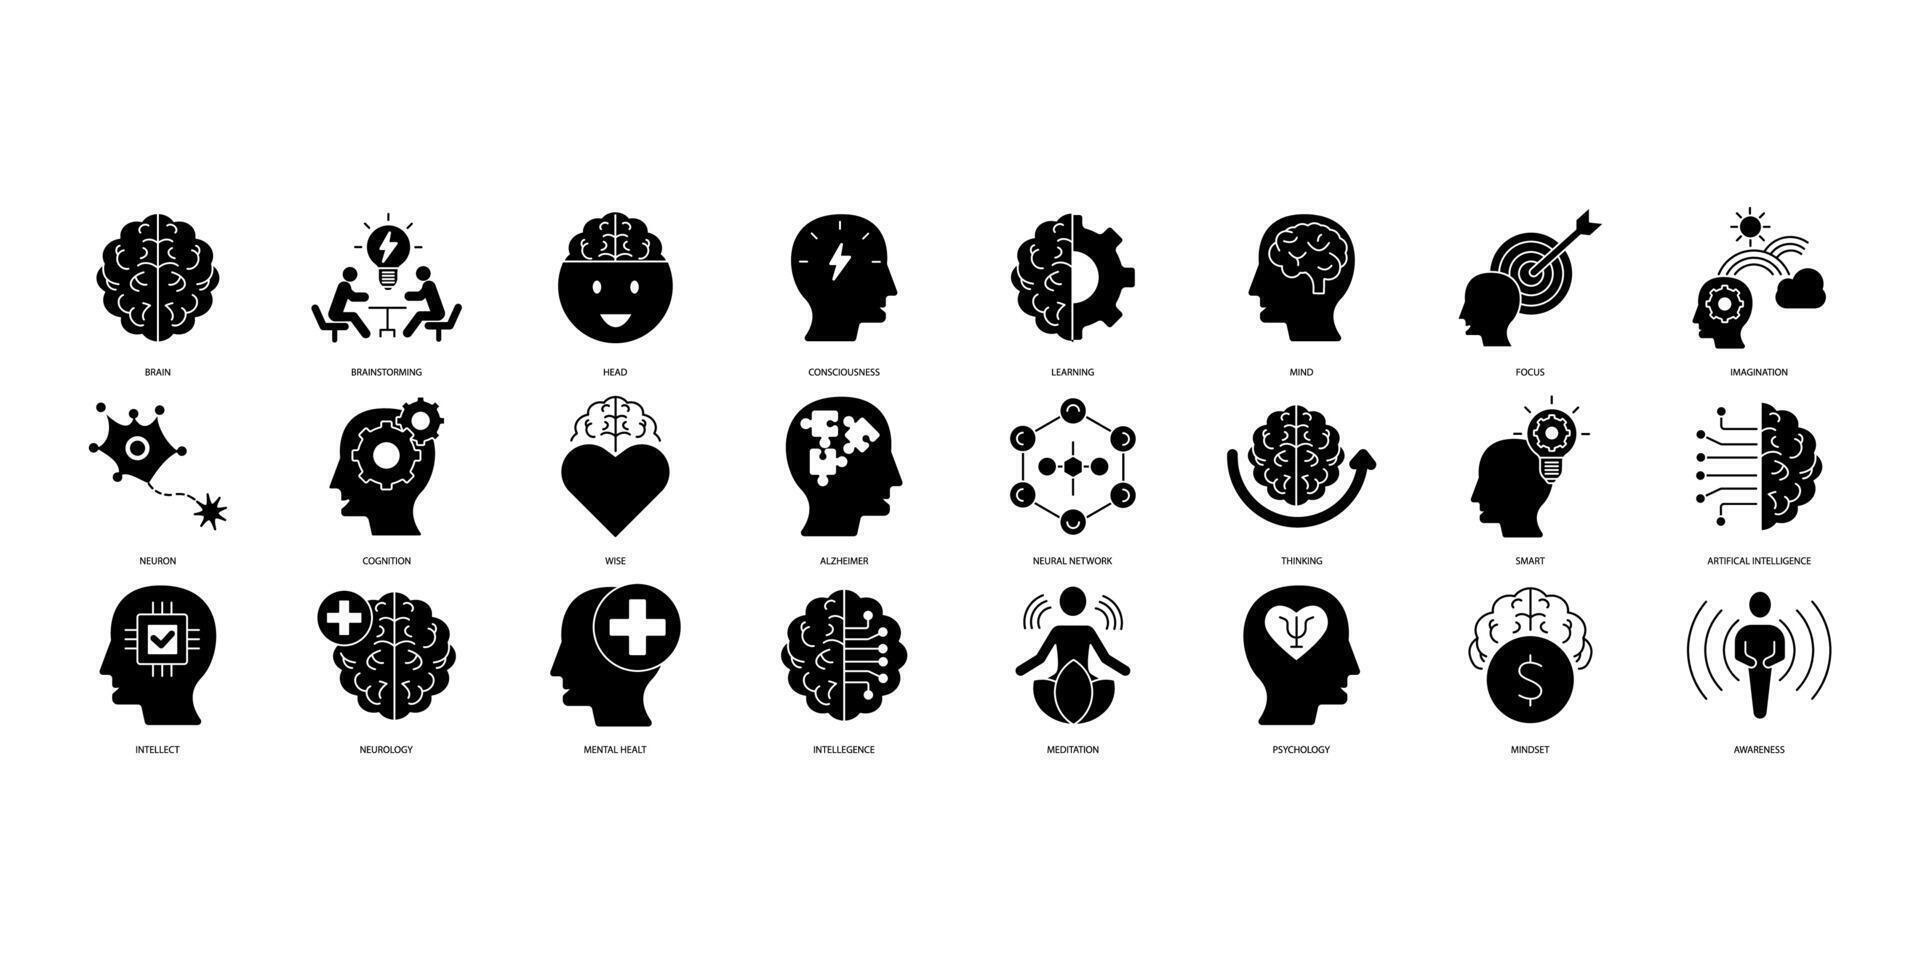 cérebro ícones definir. conjunto do editável acidente vascular encefálico icons.vector conjunto do cérebro vetor